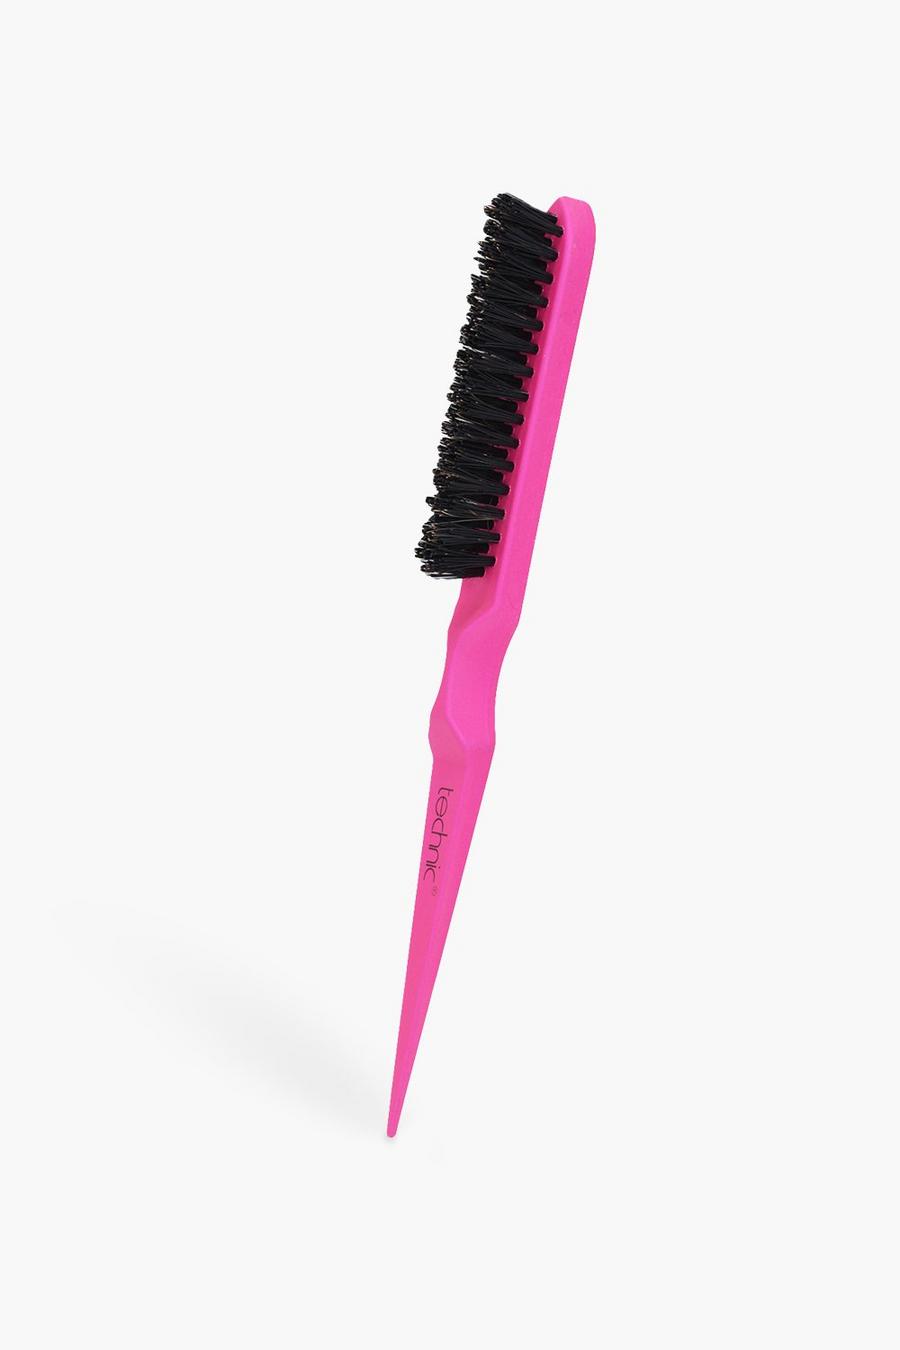 Technic - Brosse à cheveux, Rose pink